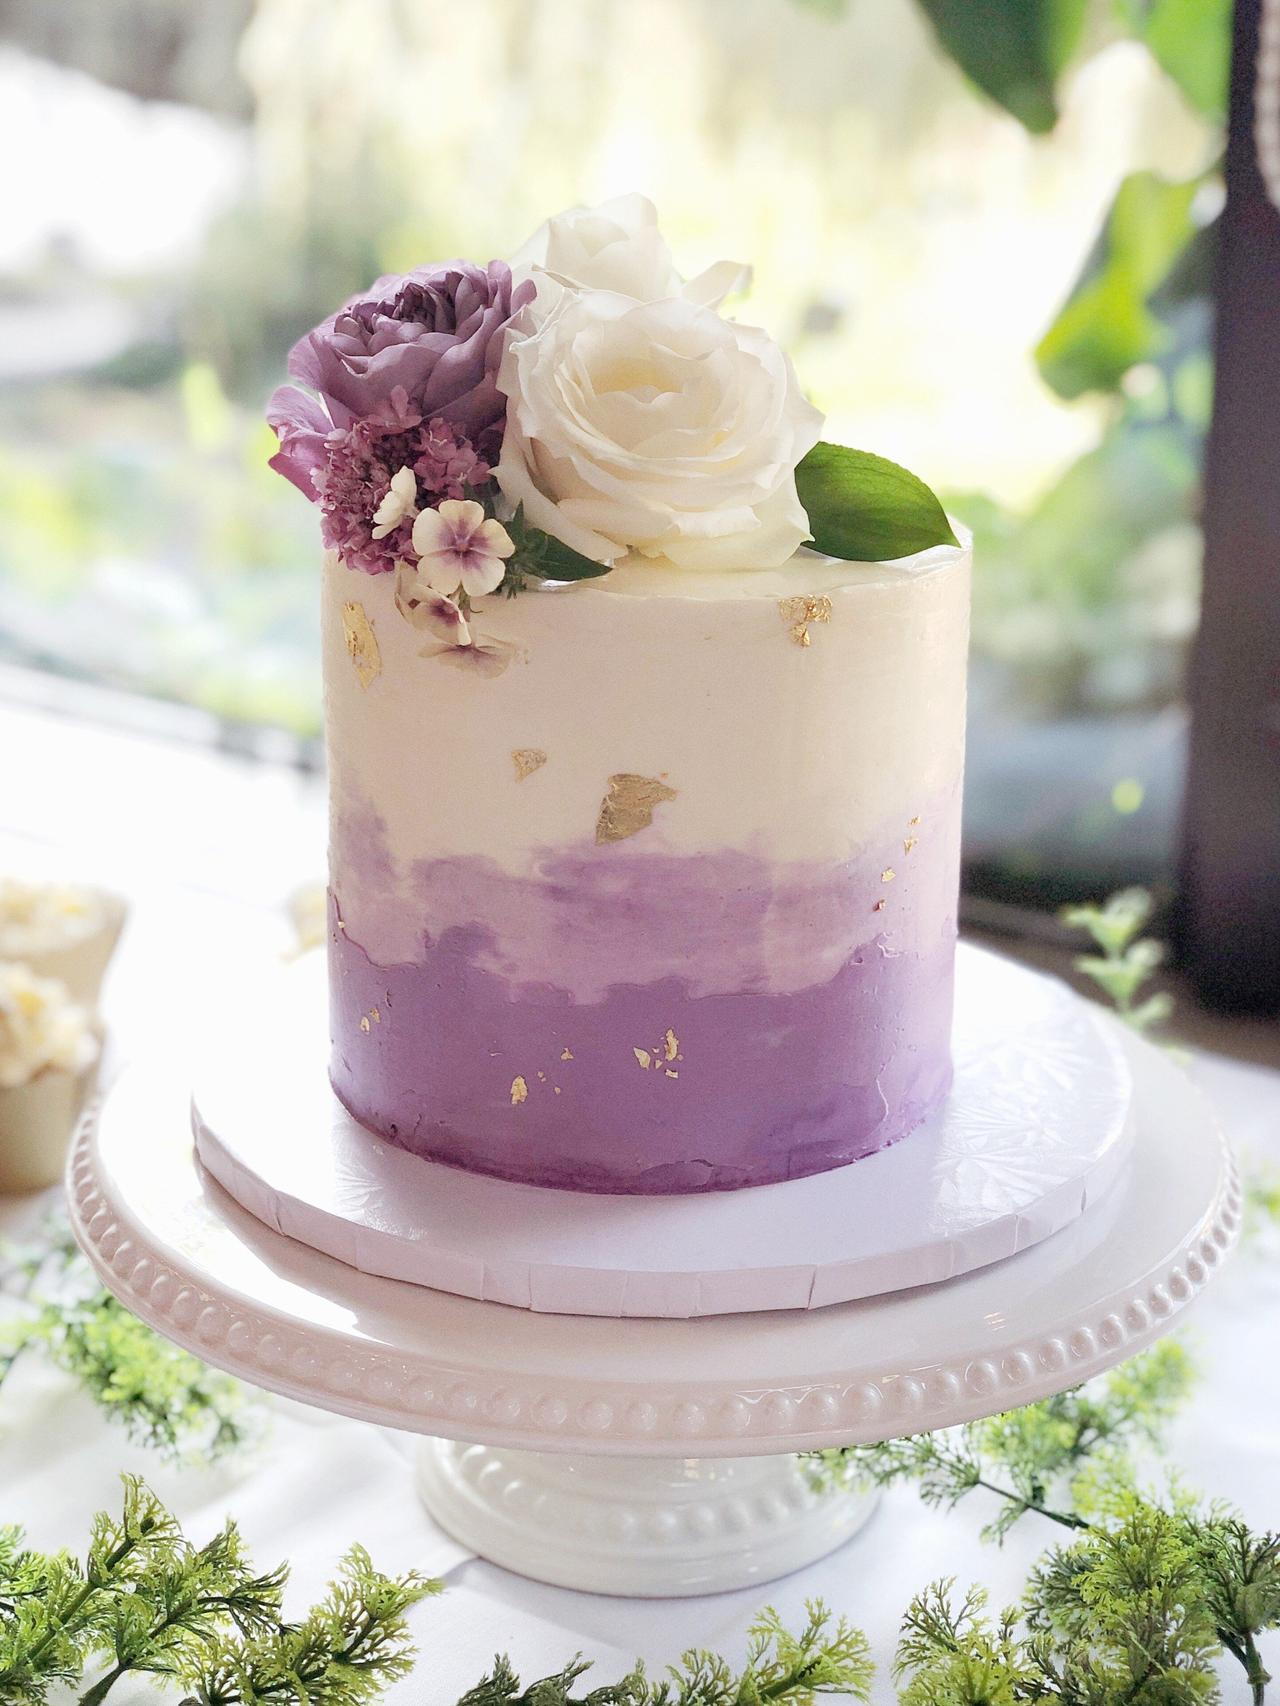 Blueberry Lavender Cake | Bicil The Baker